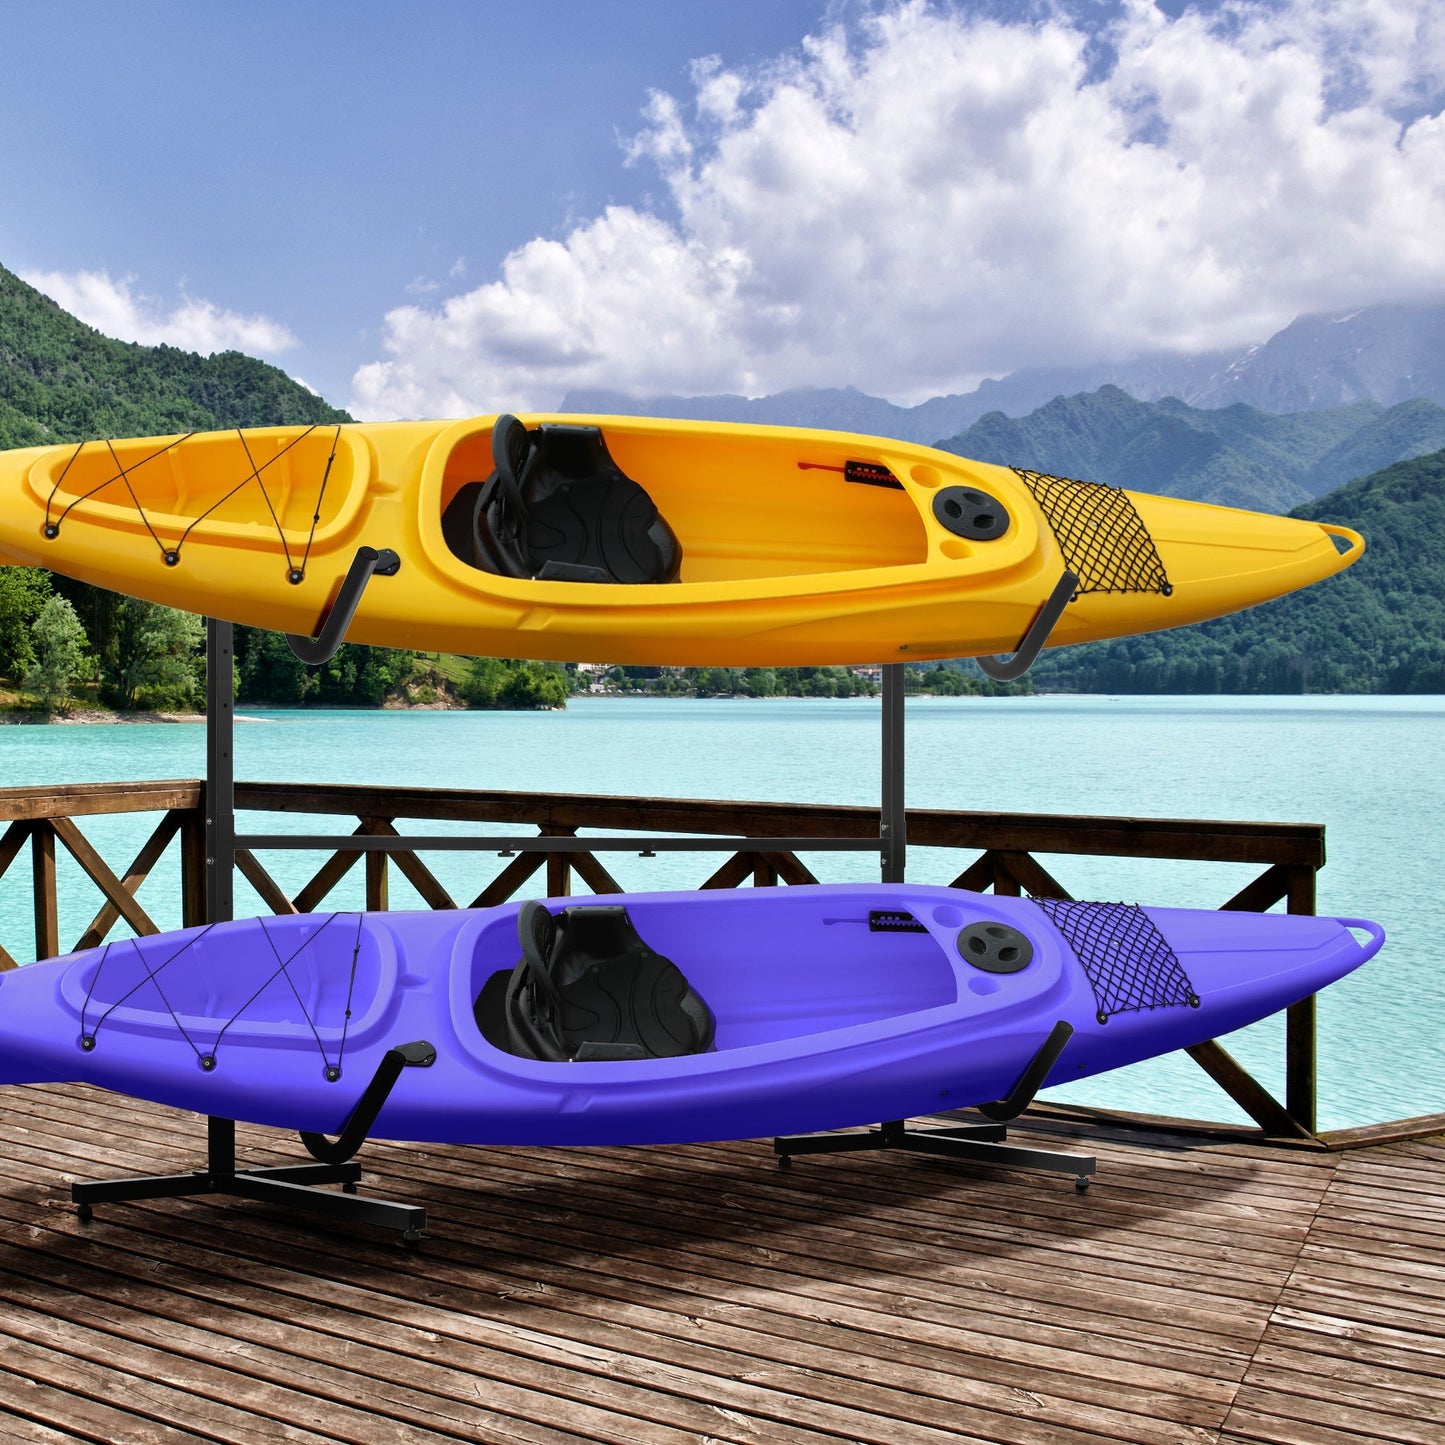 Freestanding Kayak Storage Rack with Adjustable Length, Heavy Duty Dual Kayak, SUP, Canoe, Paddleboard Rack for Indoor, Outdoor, Garage, Dock at Gallery Canada